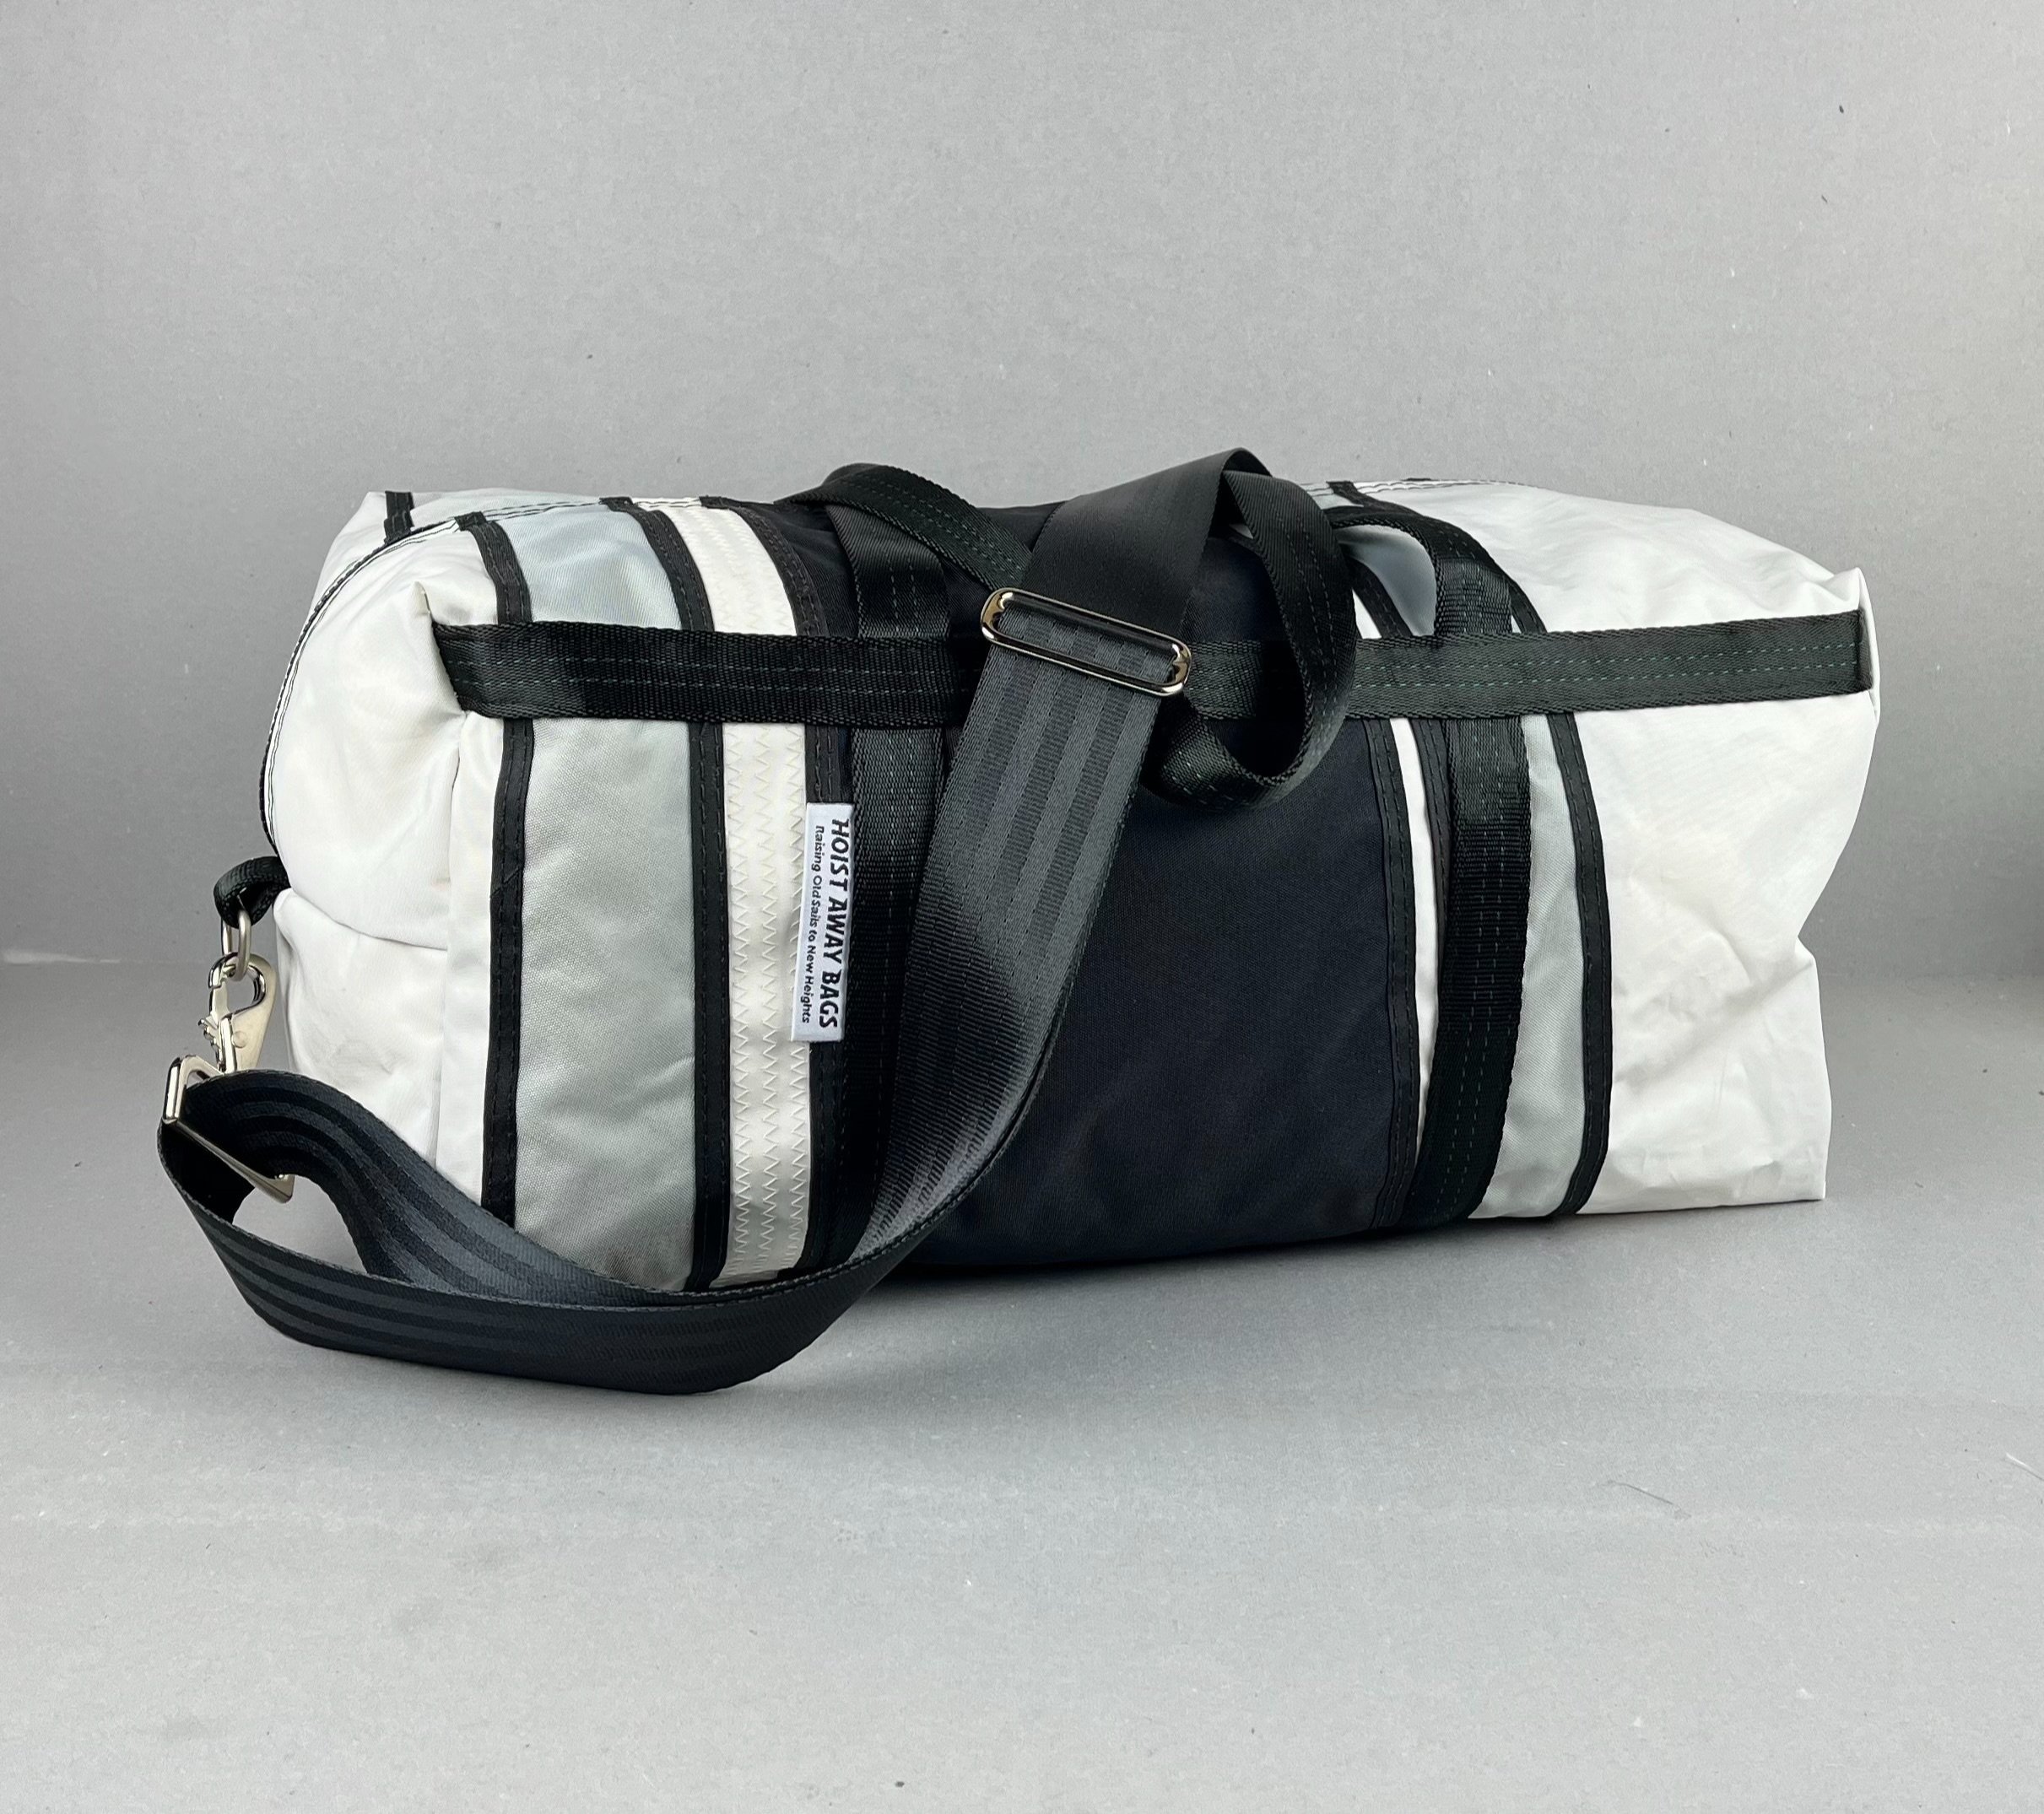 Duffel Bags — Hoist Away Bags